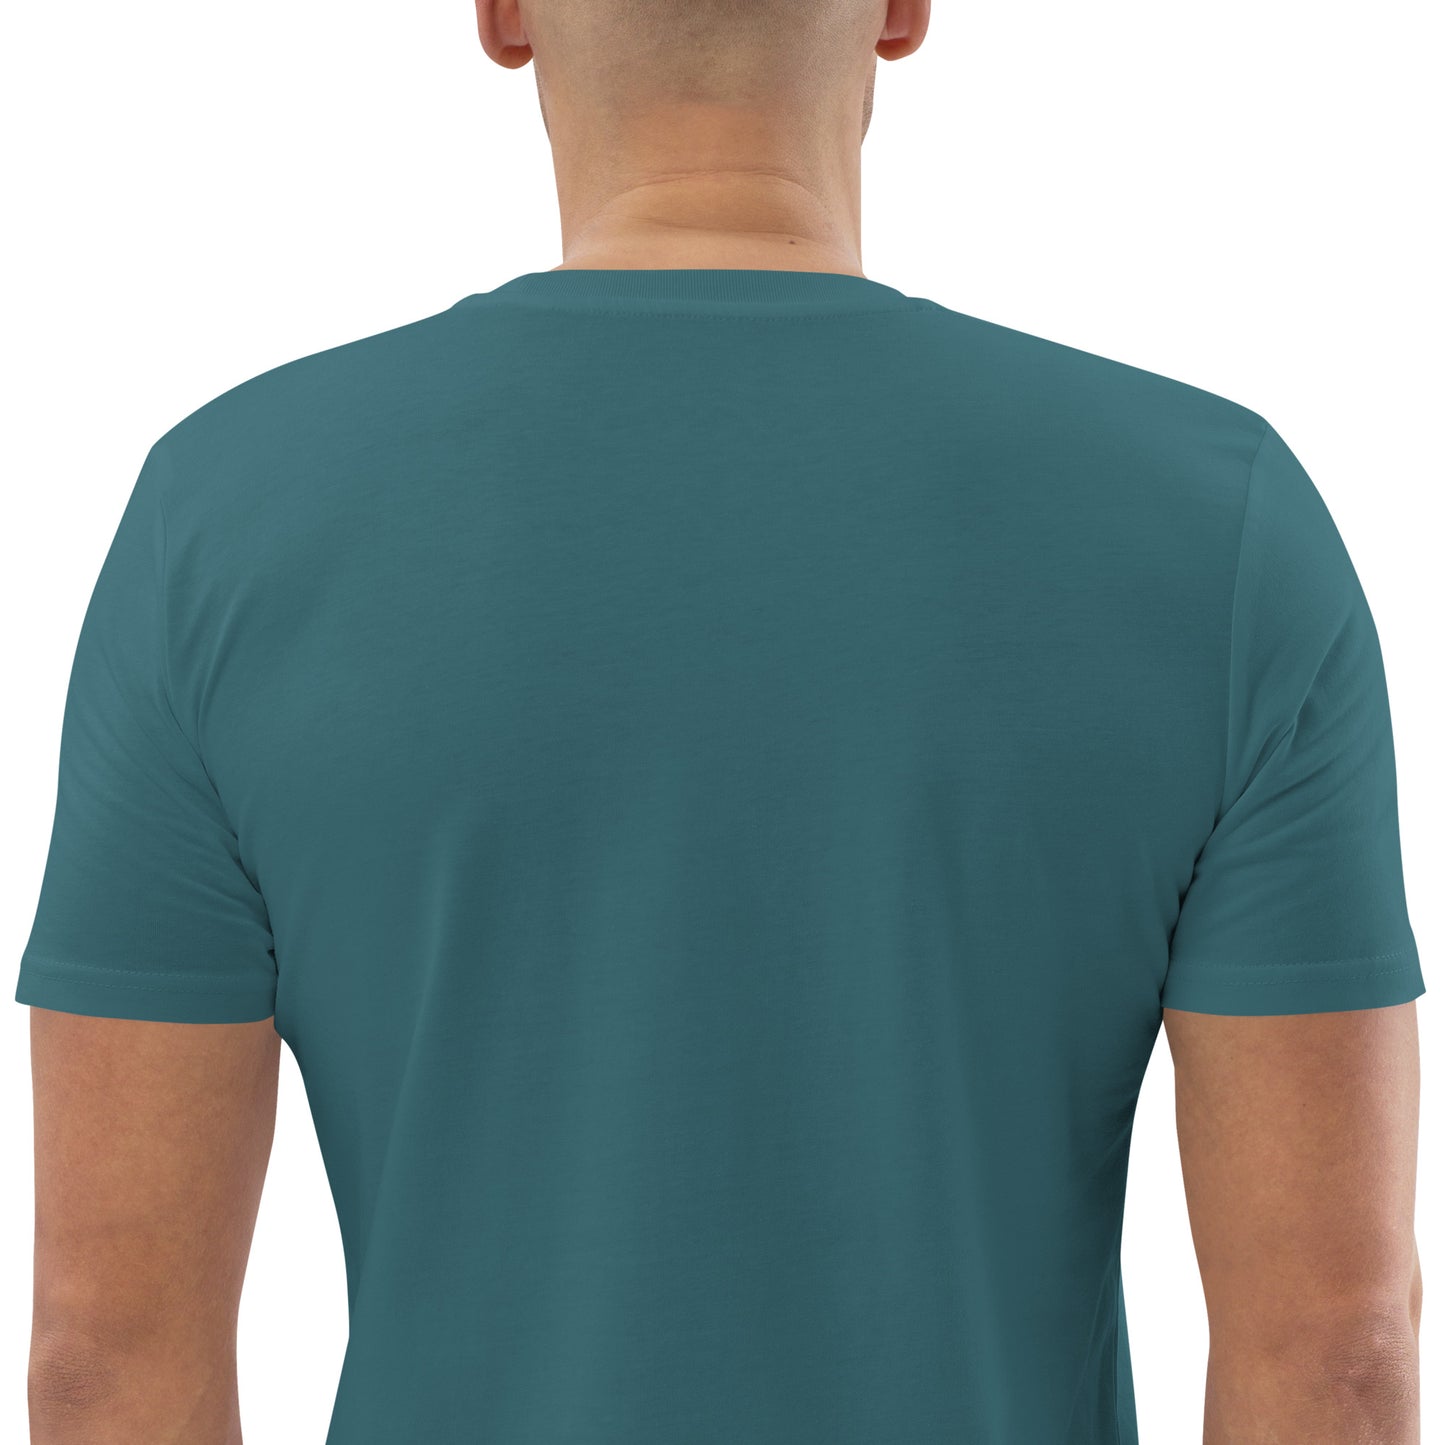 Unisex-Bio-Baumwoll-T-Shirt the good father